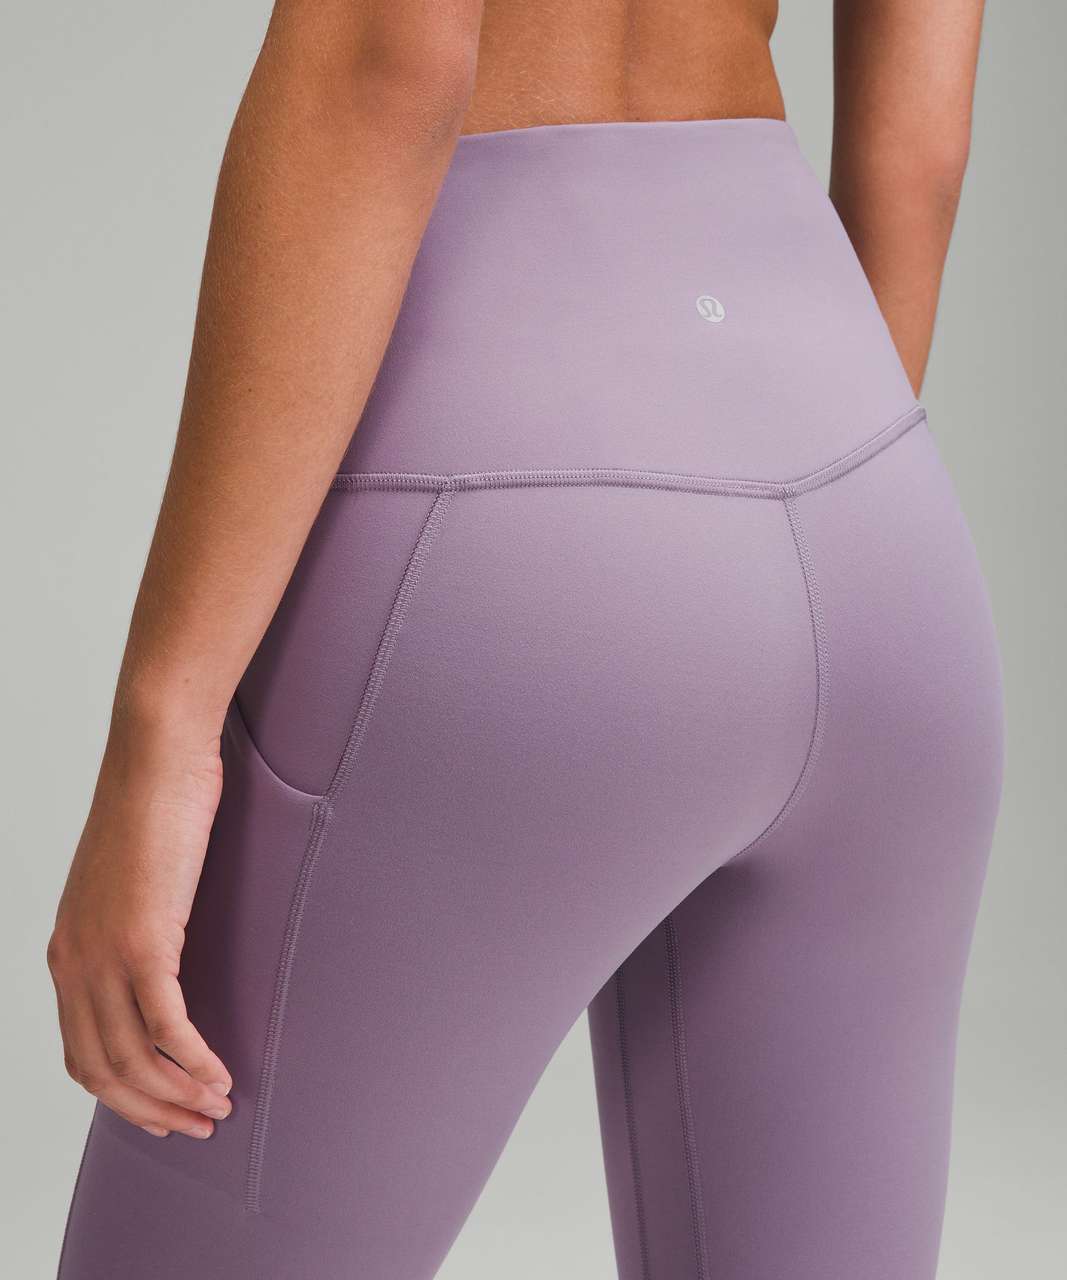 NWT Lululemon Align Pant Size 4 GRHP Graphite Purple 25 Released 2019  RARE!